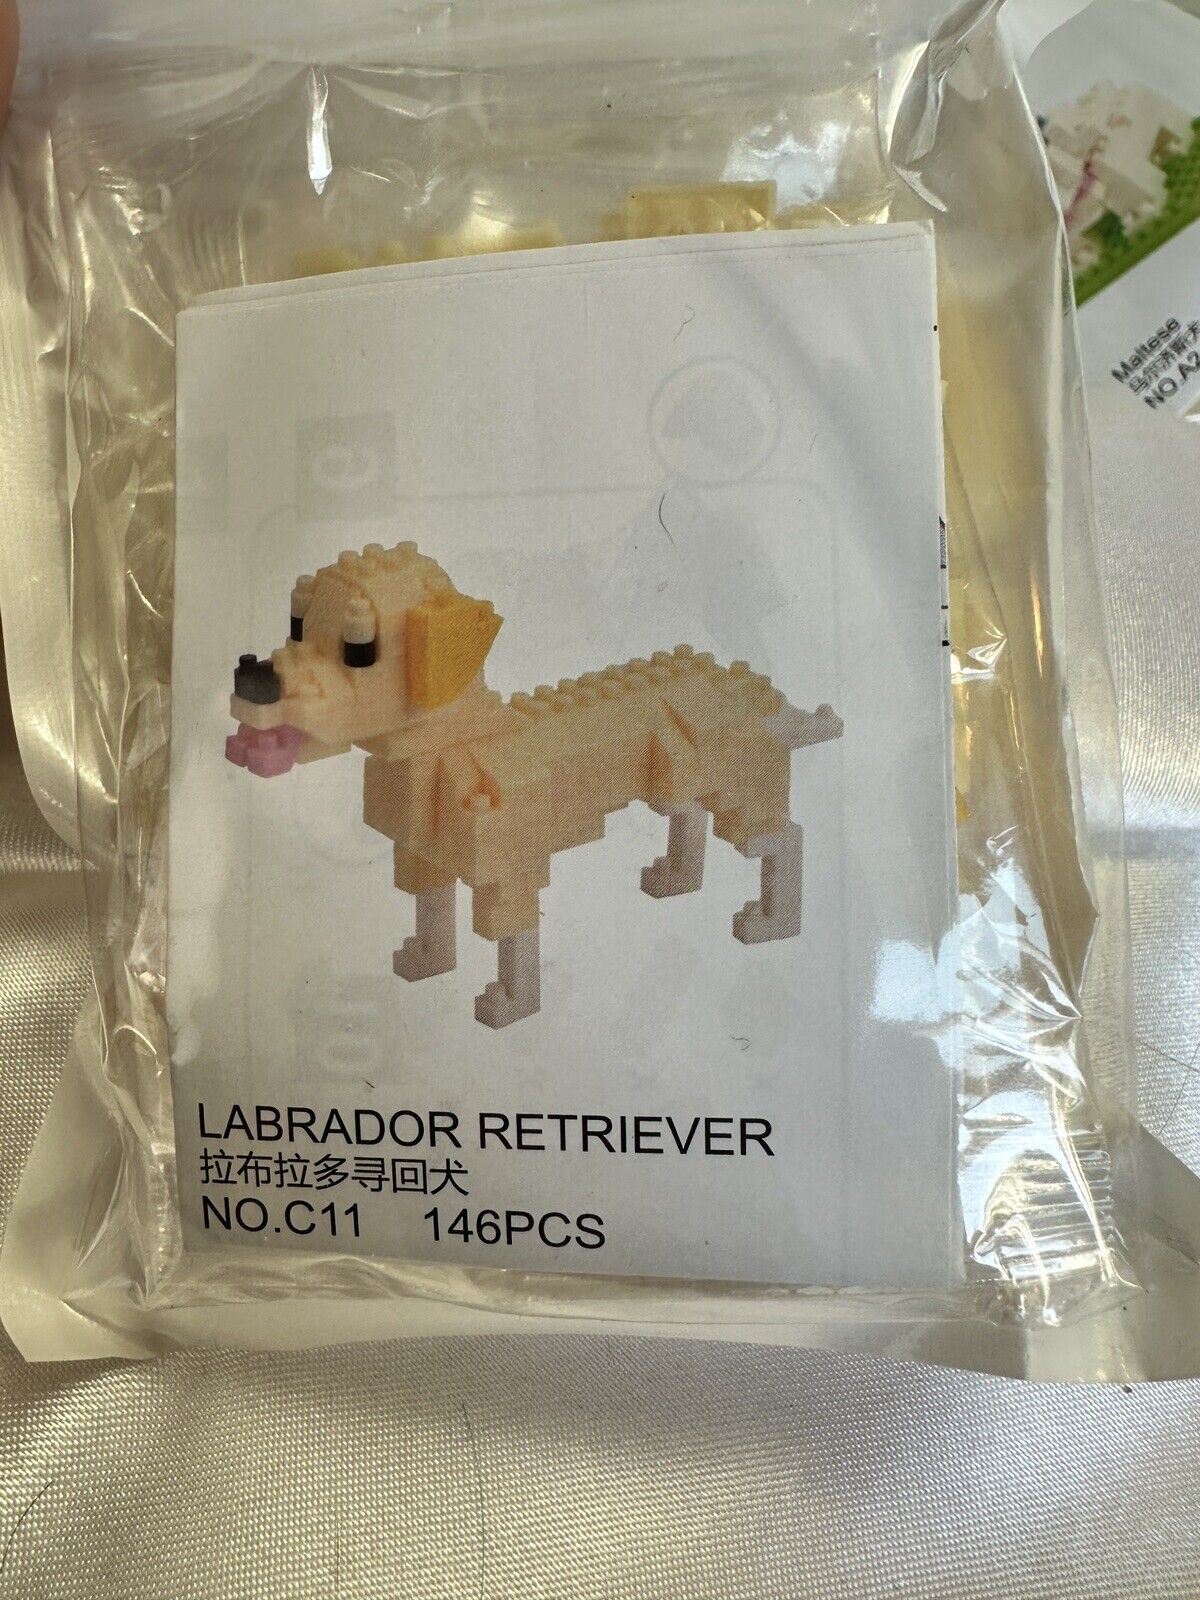 Labrador Retriever Mini Brick Kit 146 Pcs Toy Nano Brick, Lego Like Dog